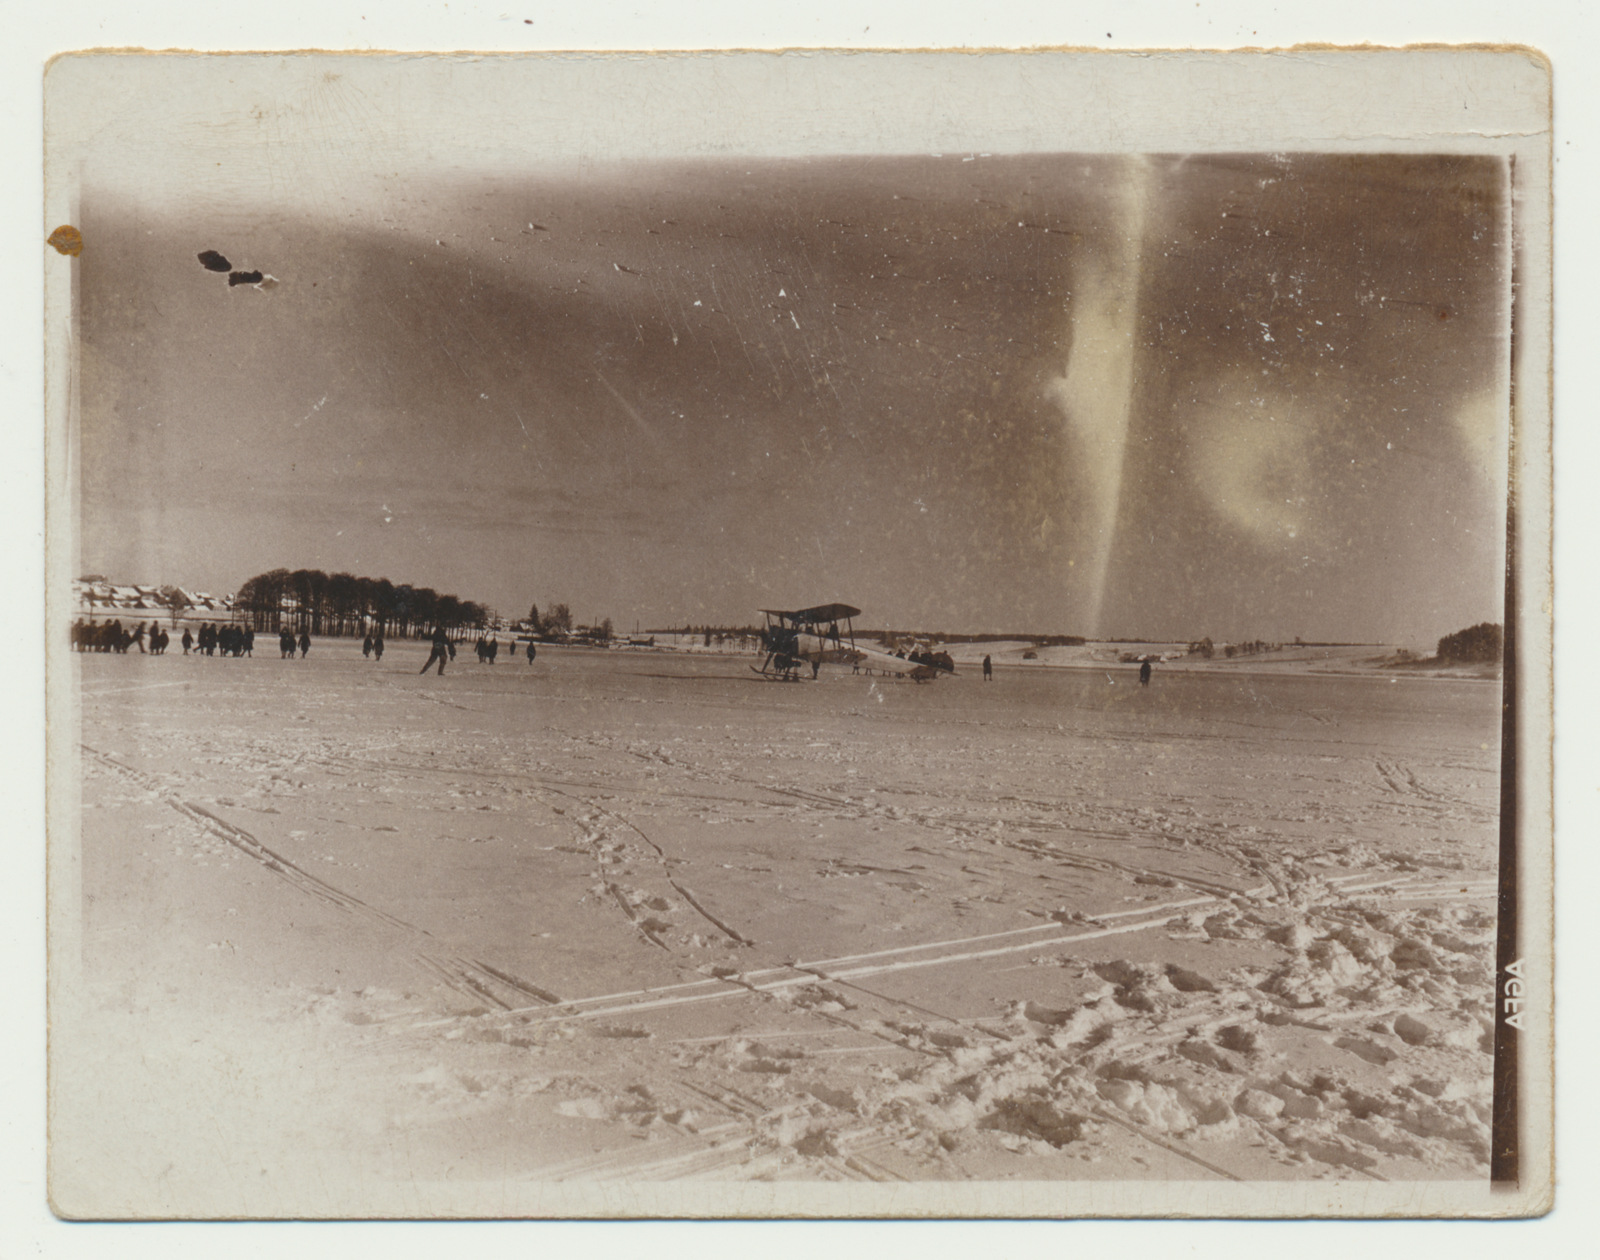 foto, Viljandi, I lennuk (AVRO) järvel 03.1931, foto K. Hunt